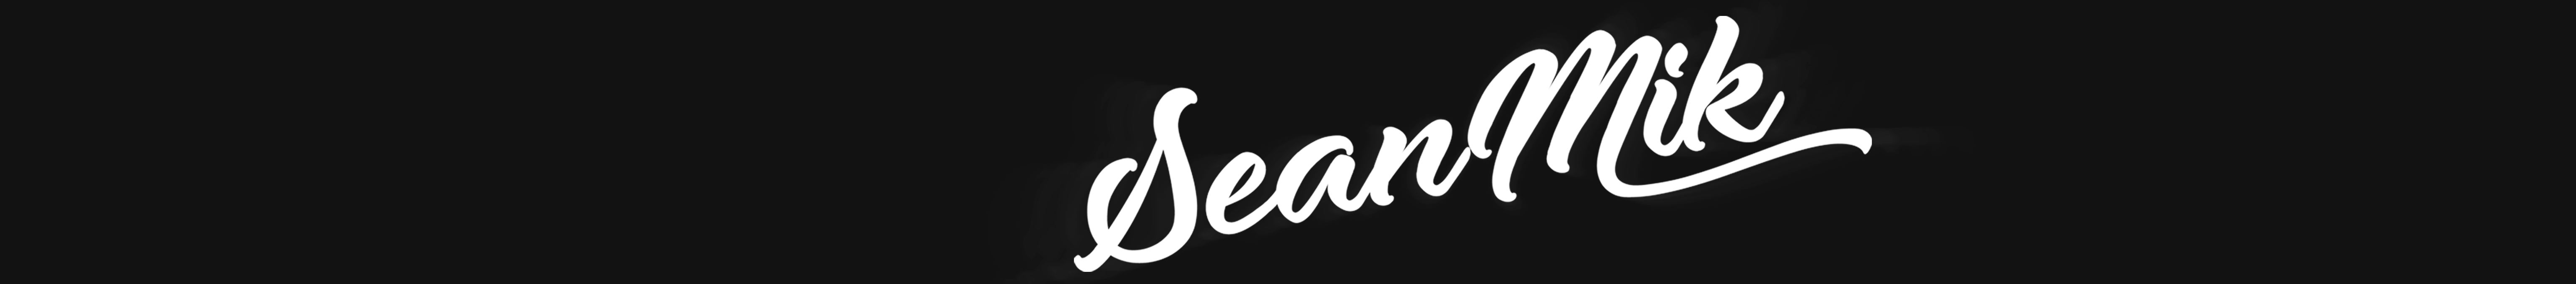 SEANMIK DESIGN's profile banner